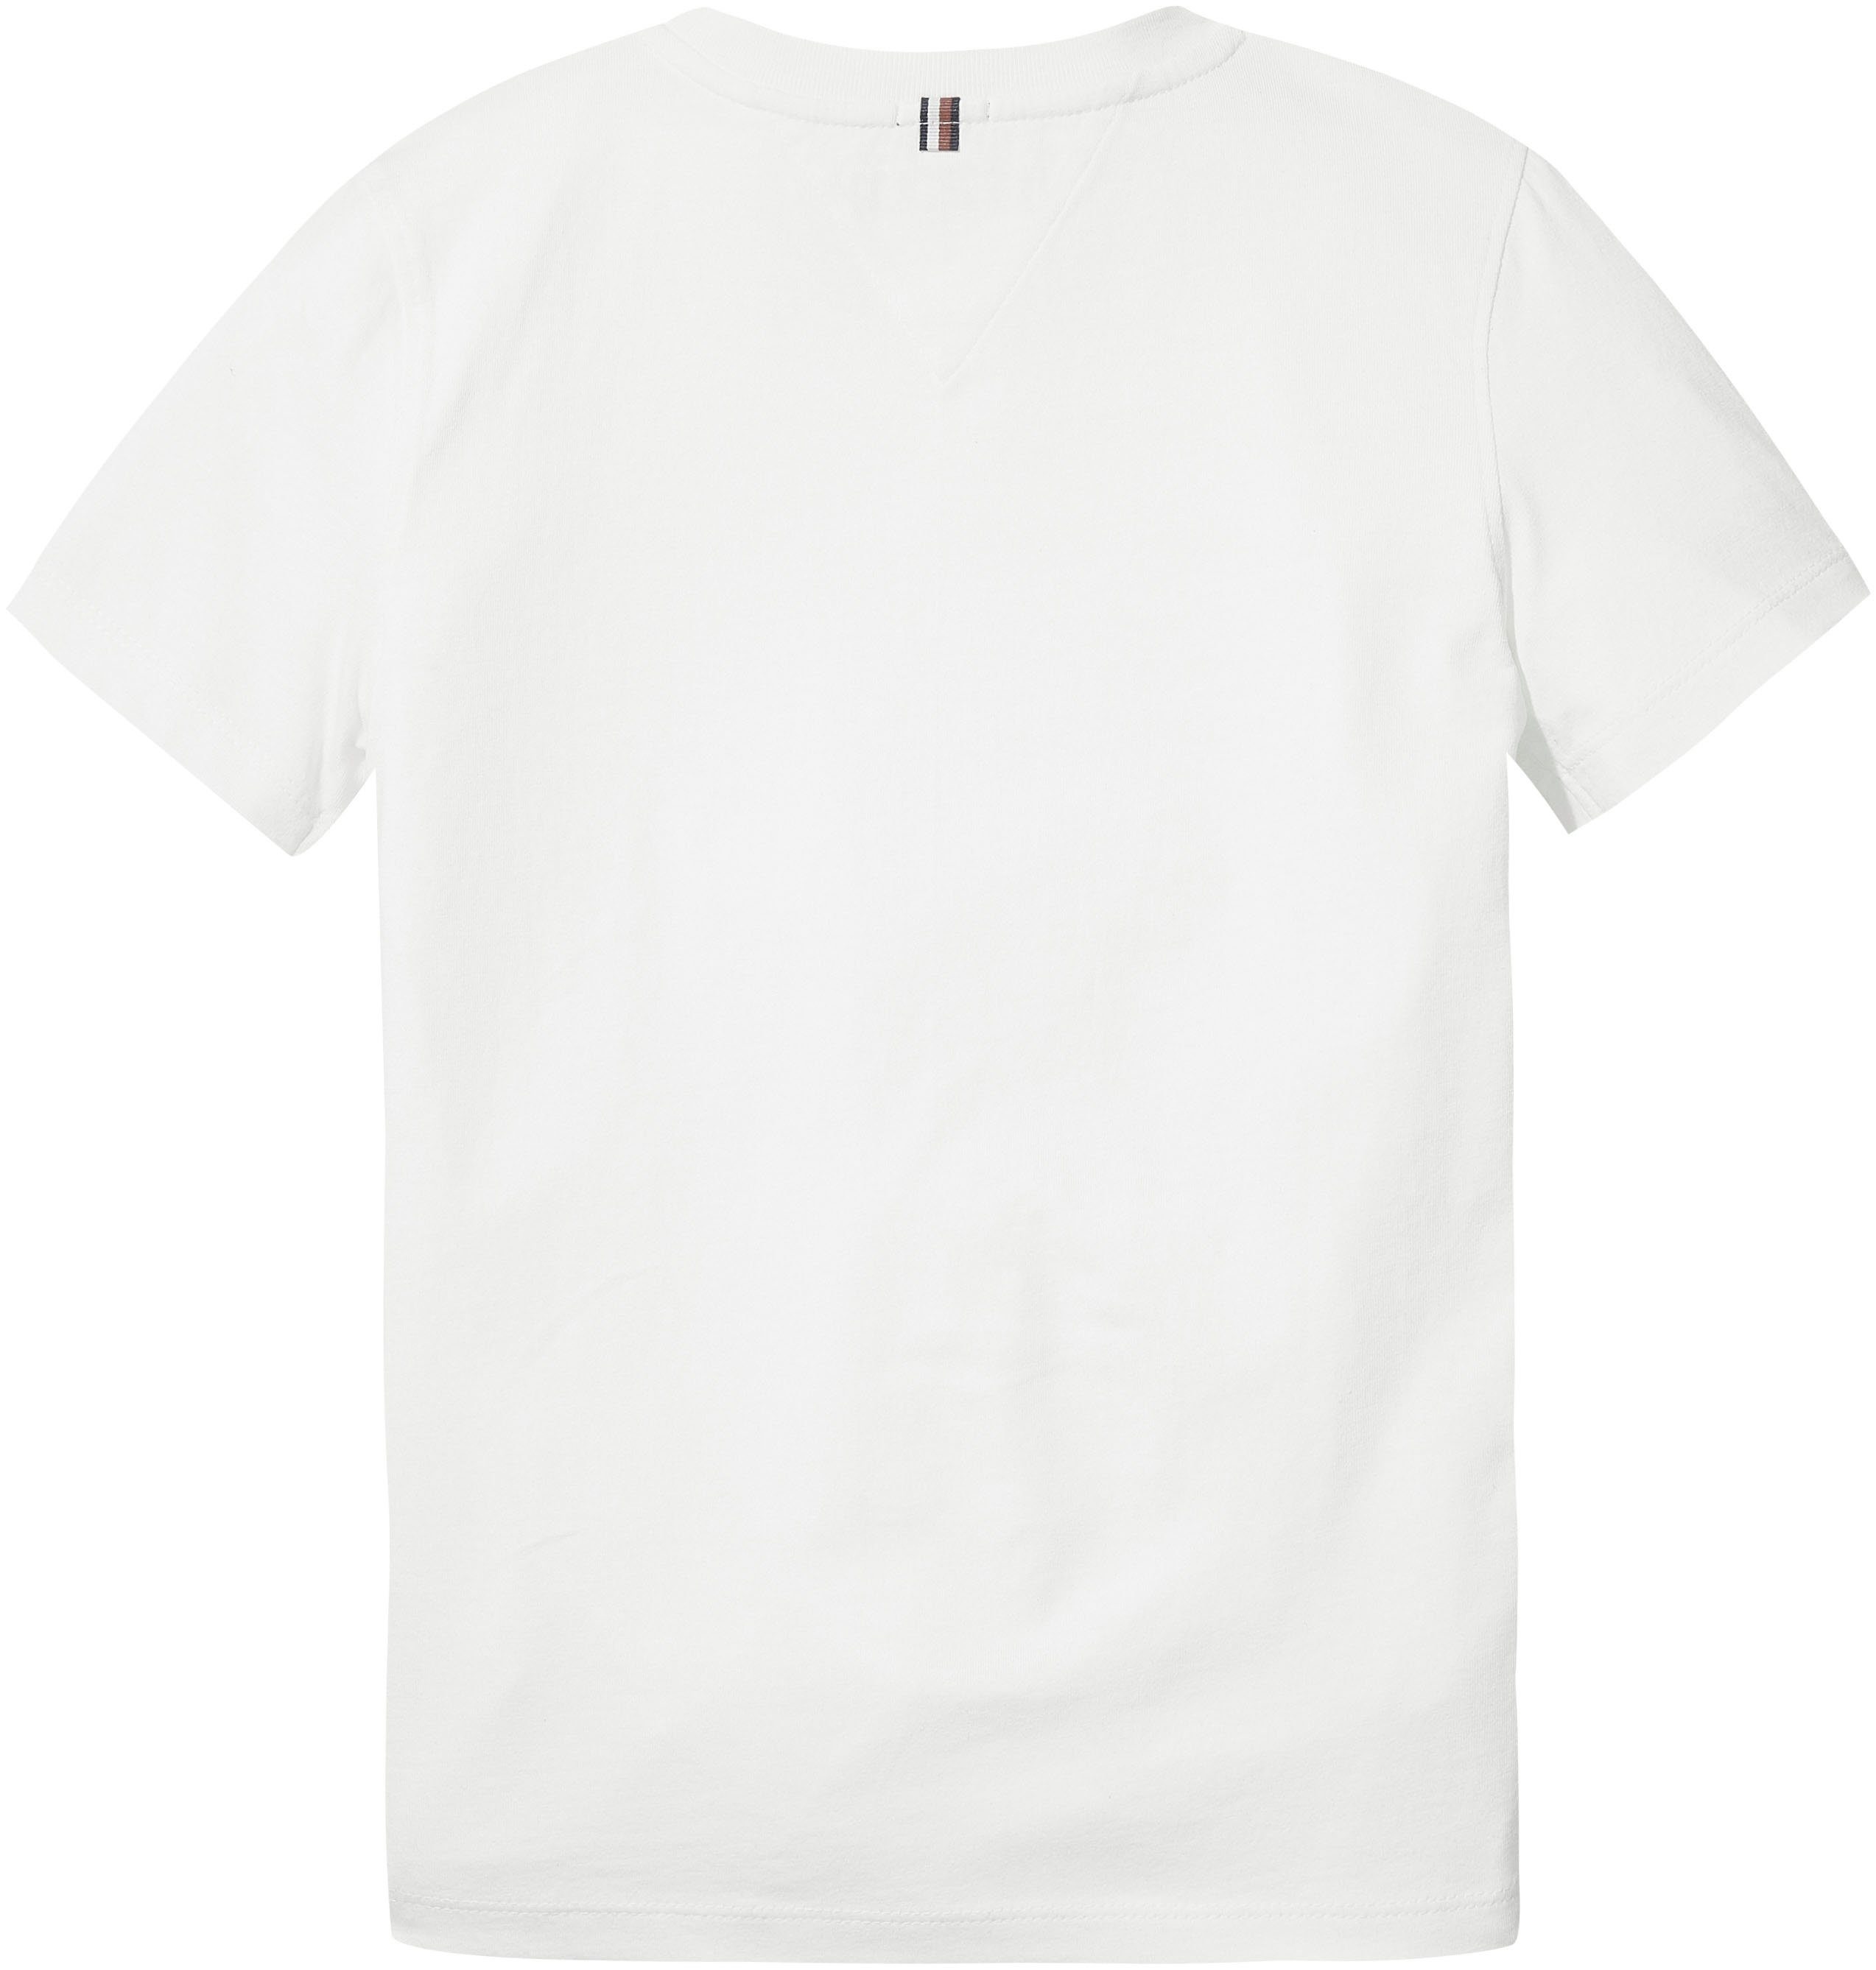 KNIT Hilfiger BOYS T-Shirt BASIC CN Tommy